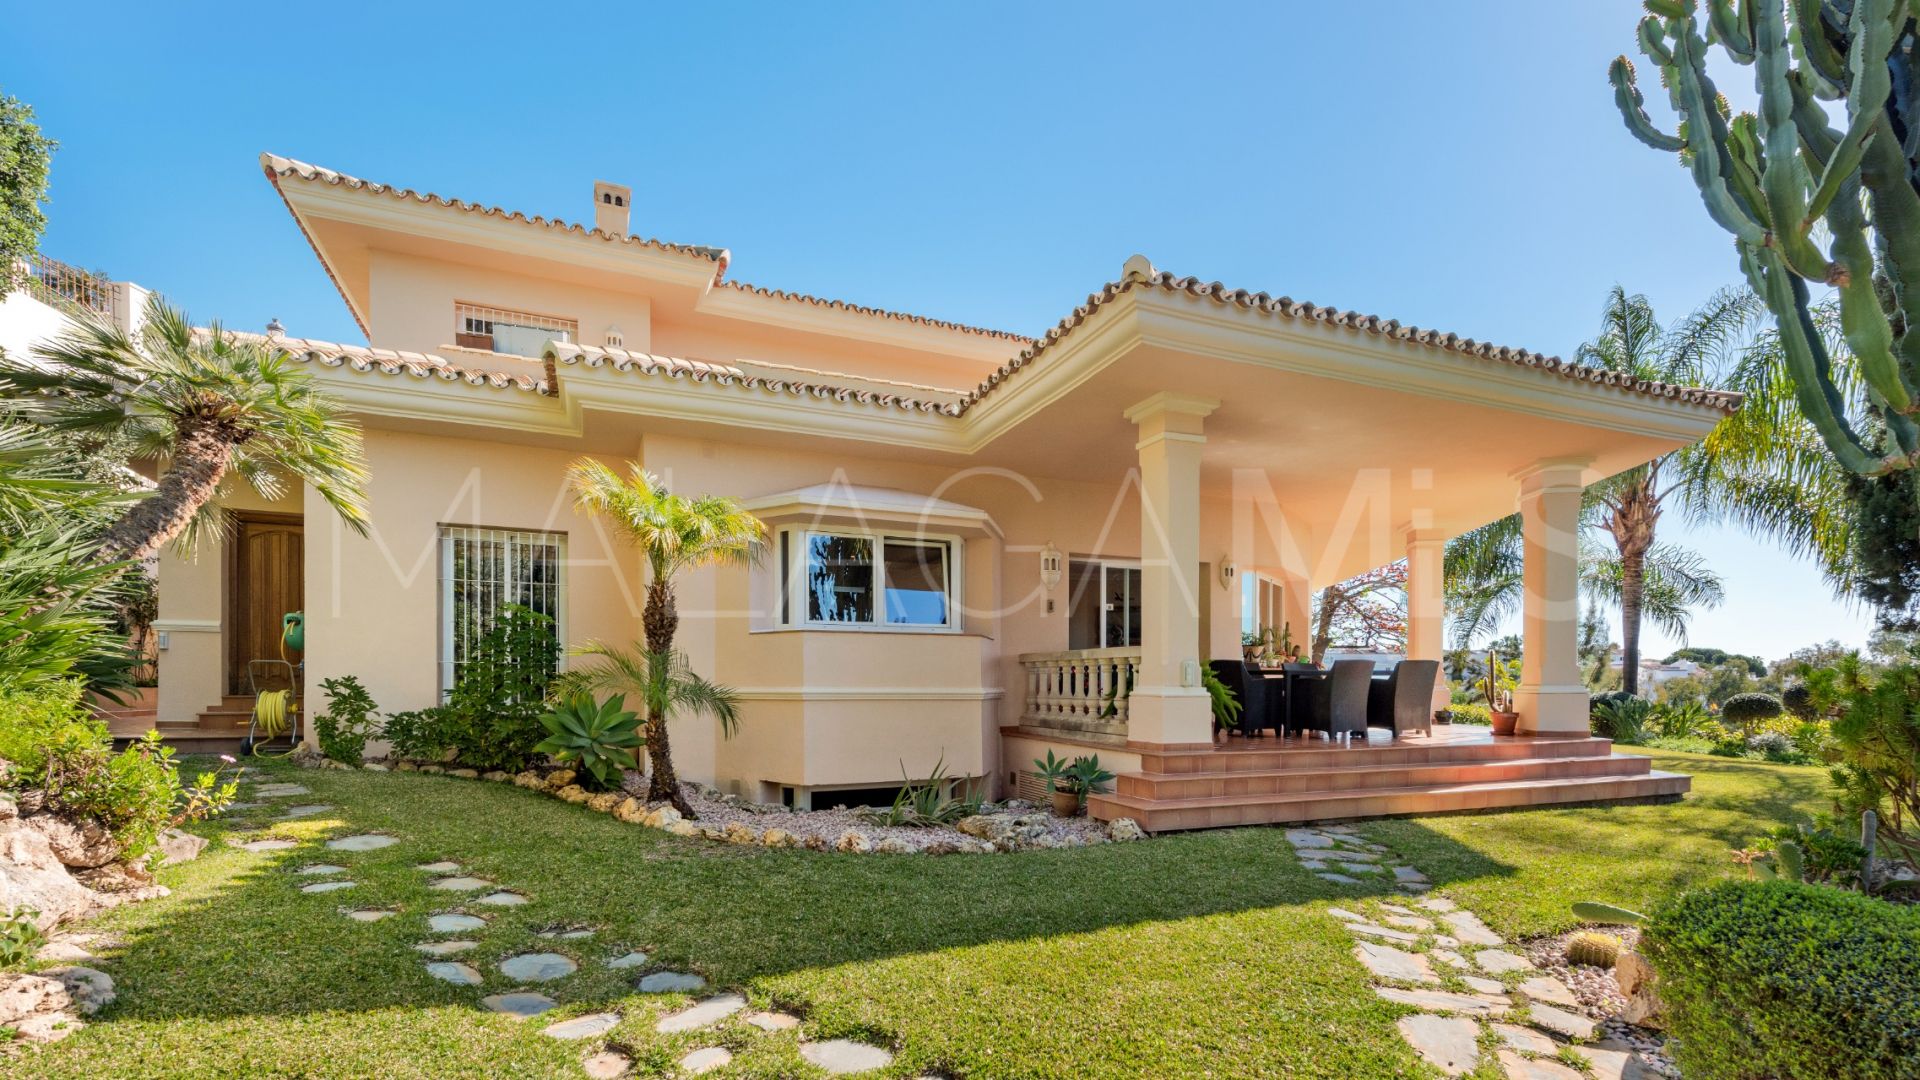 4 bedrooms villa in El Herrojo for sale